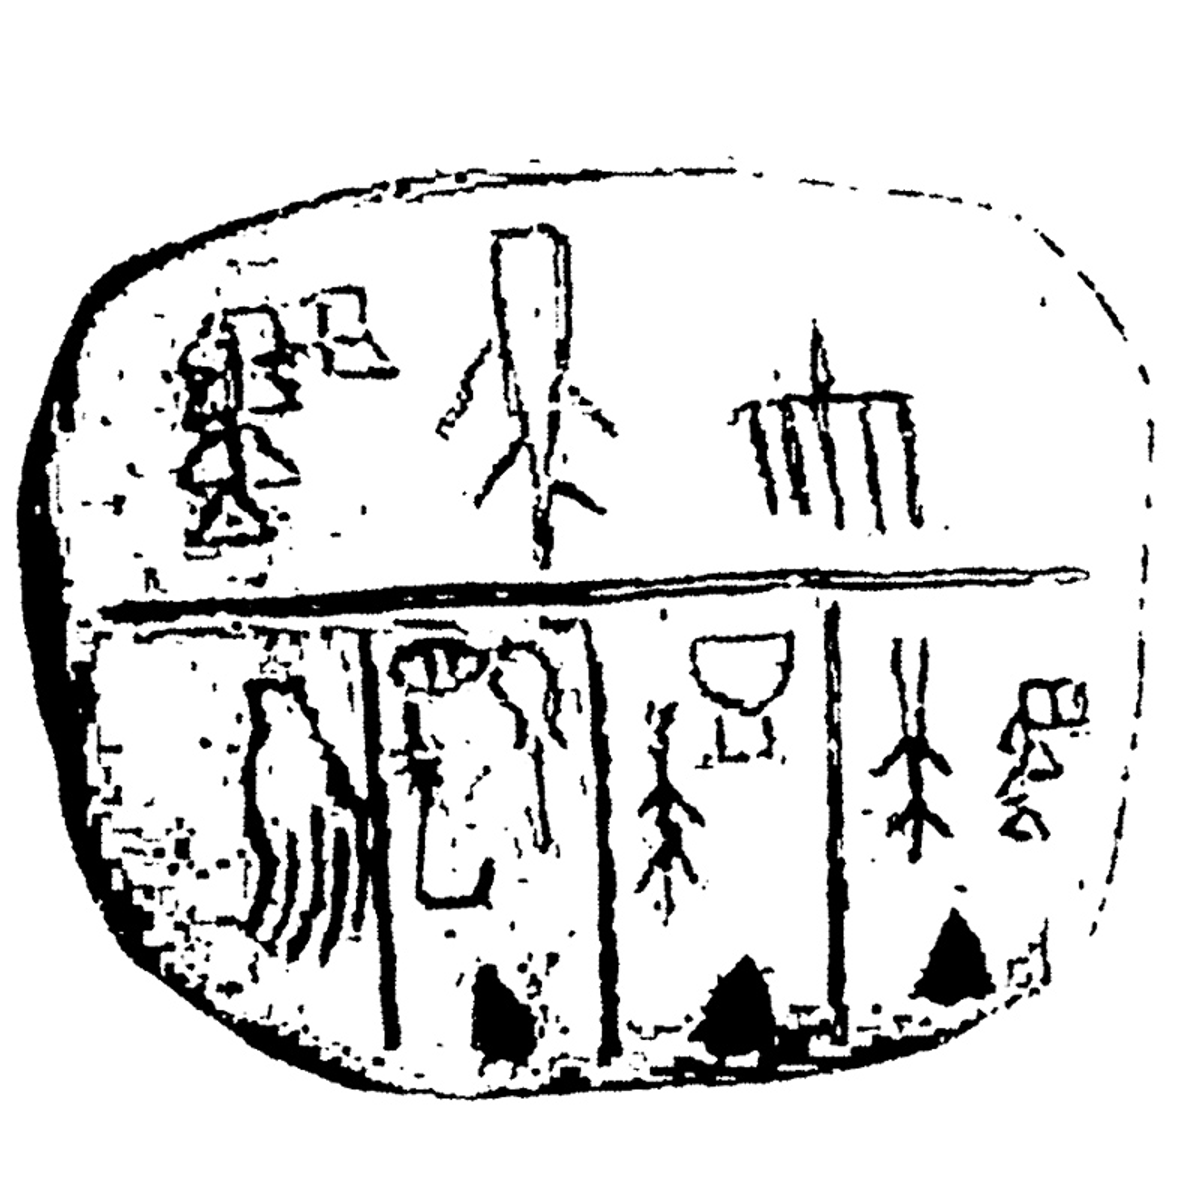 -3400, Development of writing in Mesopotamia